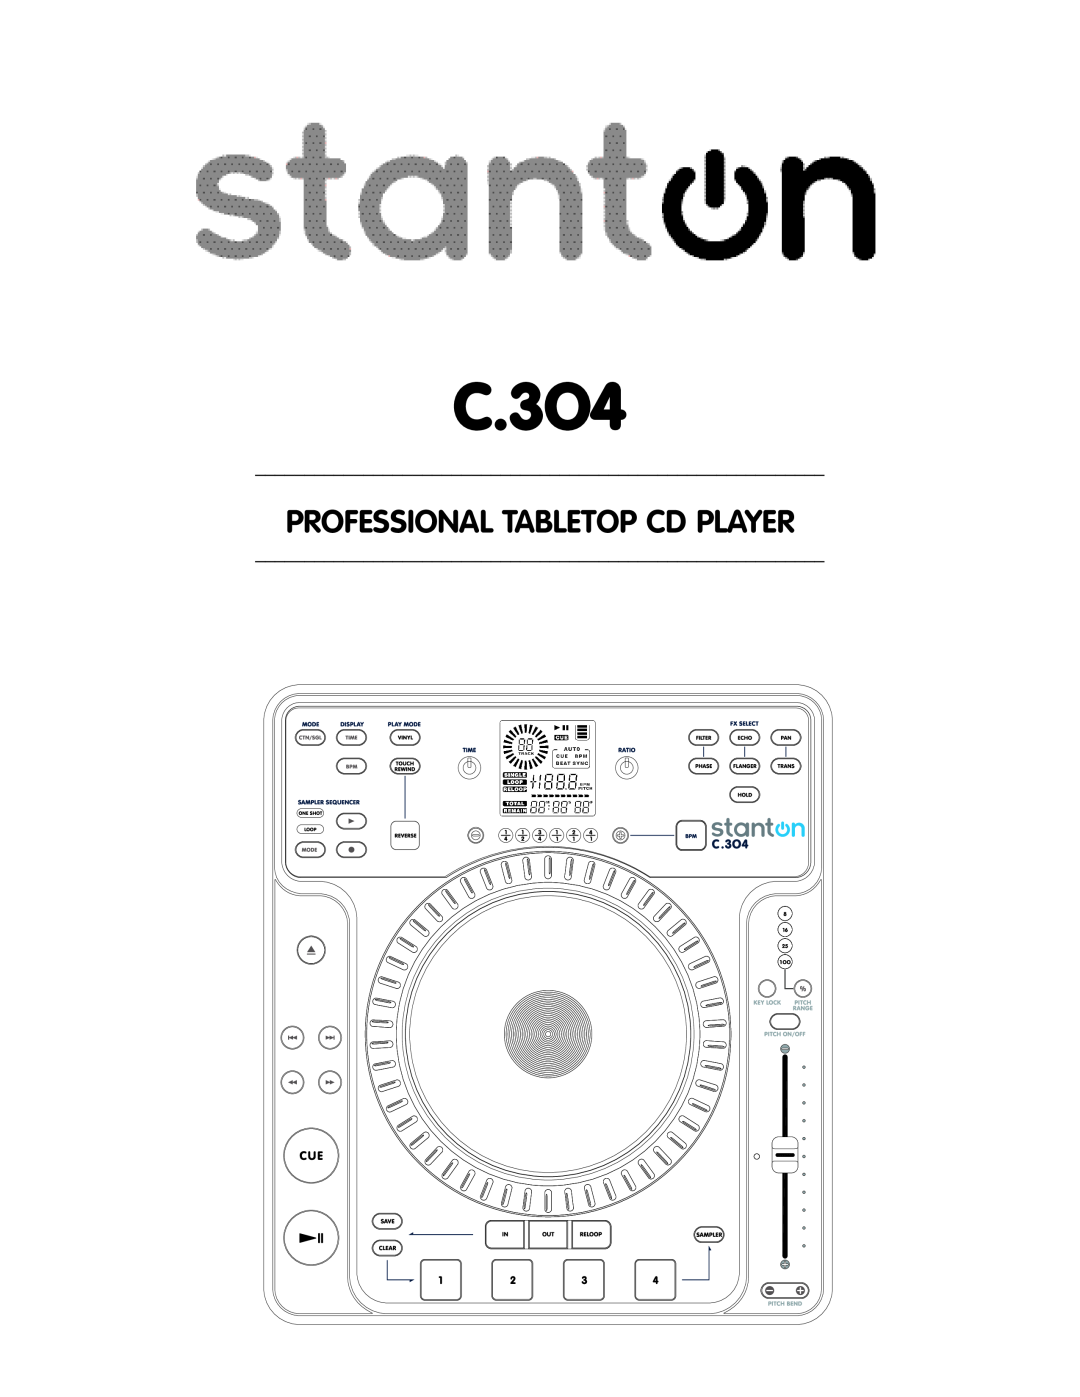 Stanton C.304 manual C.3O4, Professional Tabletop Cd Player 